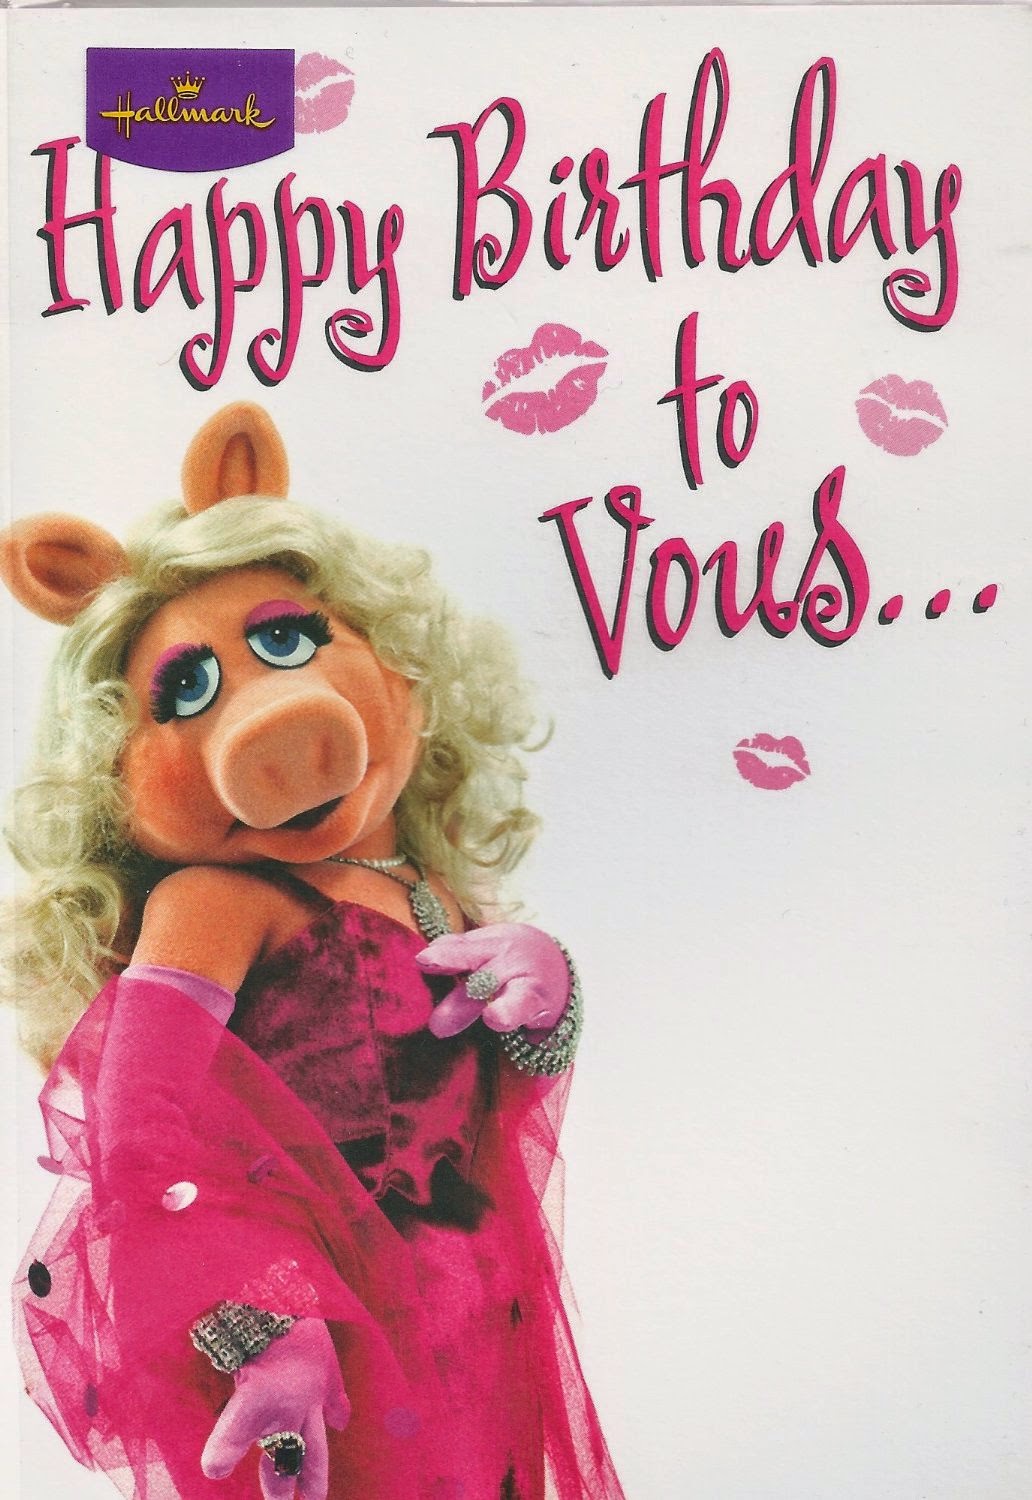 Muppet Birthday Cards